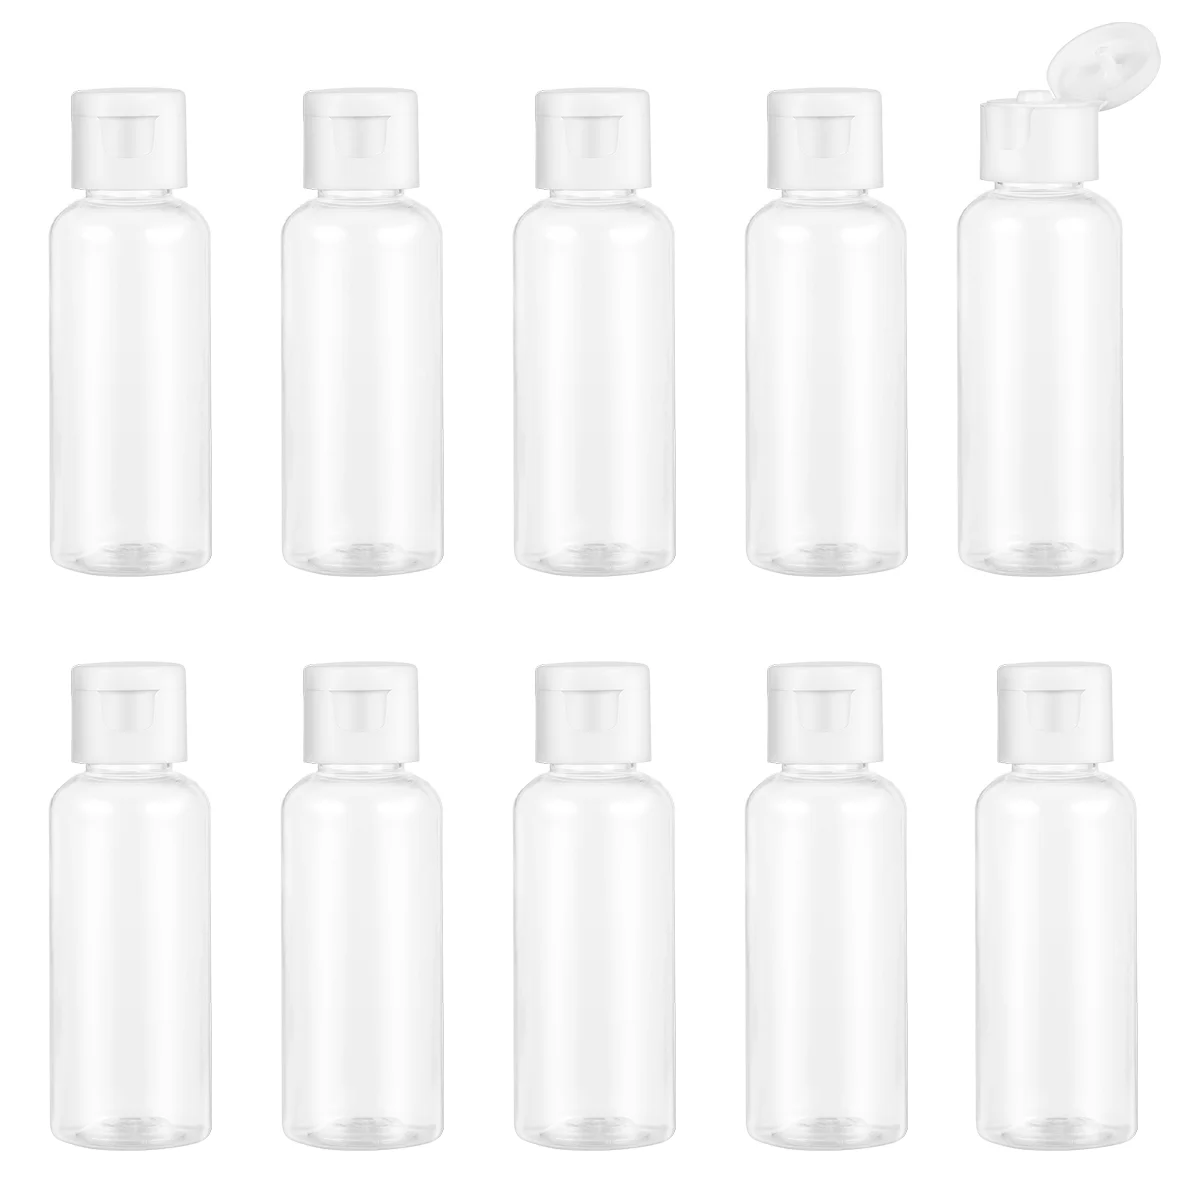 

Plastic Bottles Refillable Bottles Liquid Cosmetics Containers Shampoo Cream For Travel